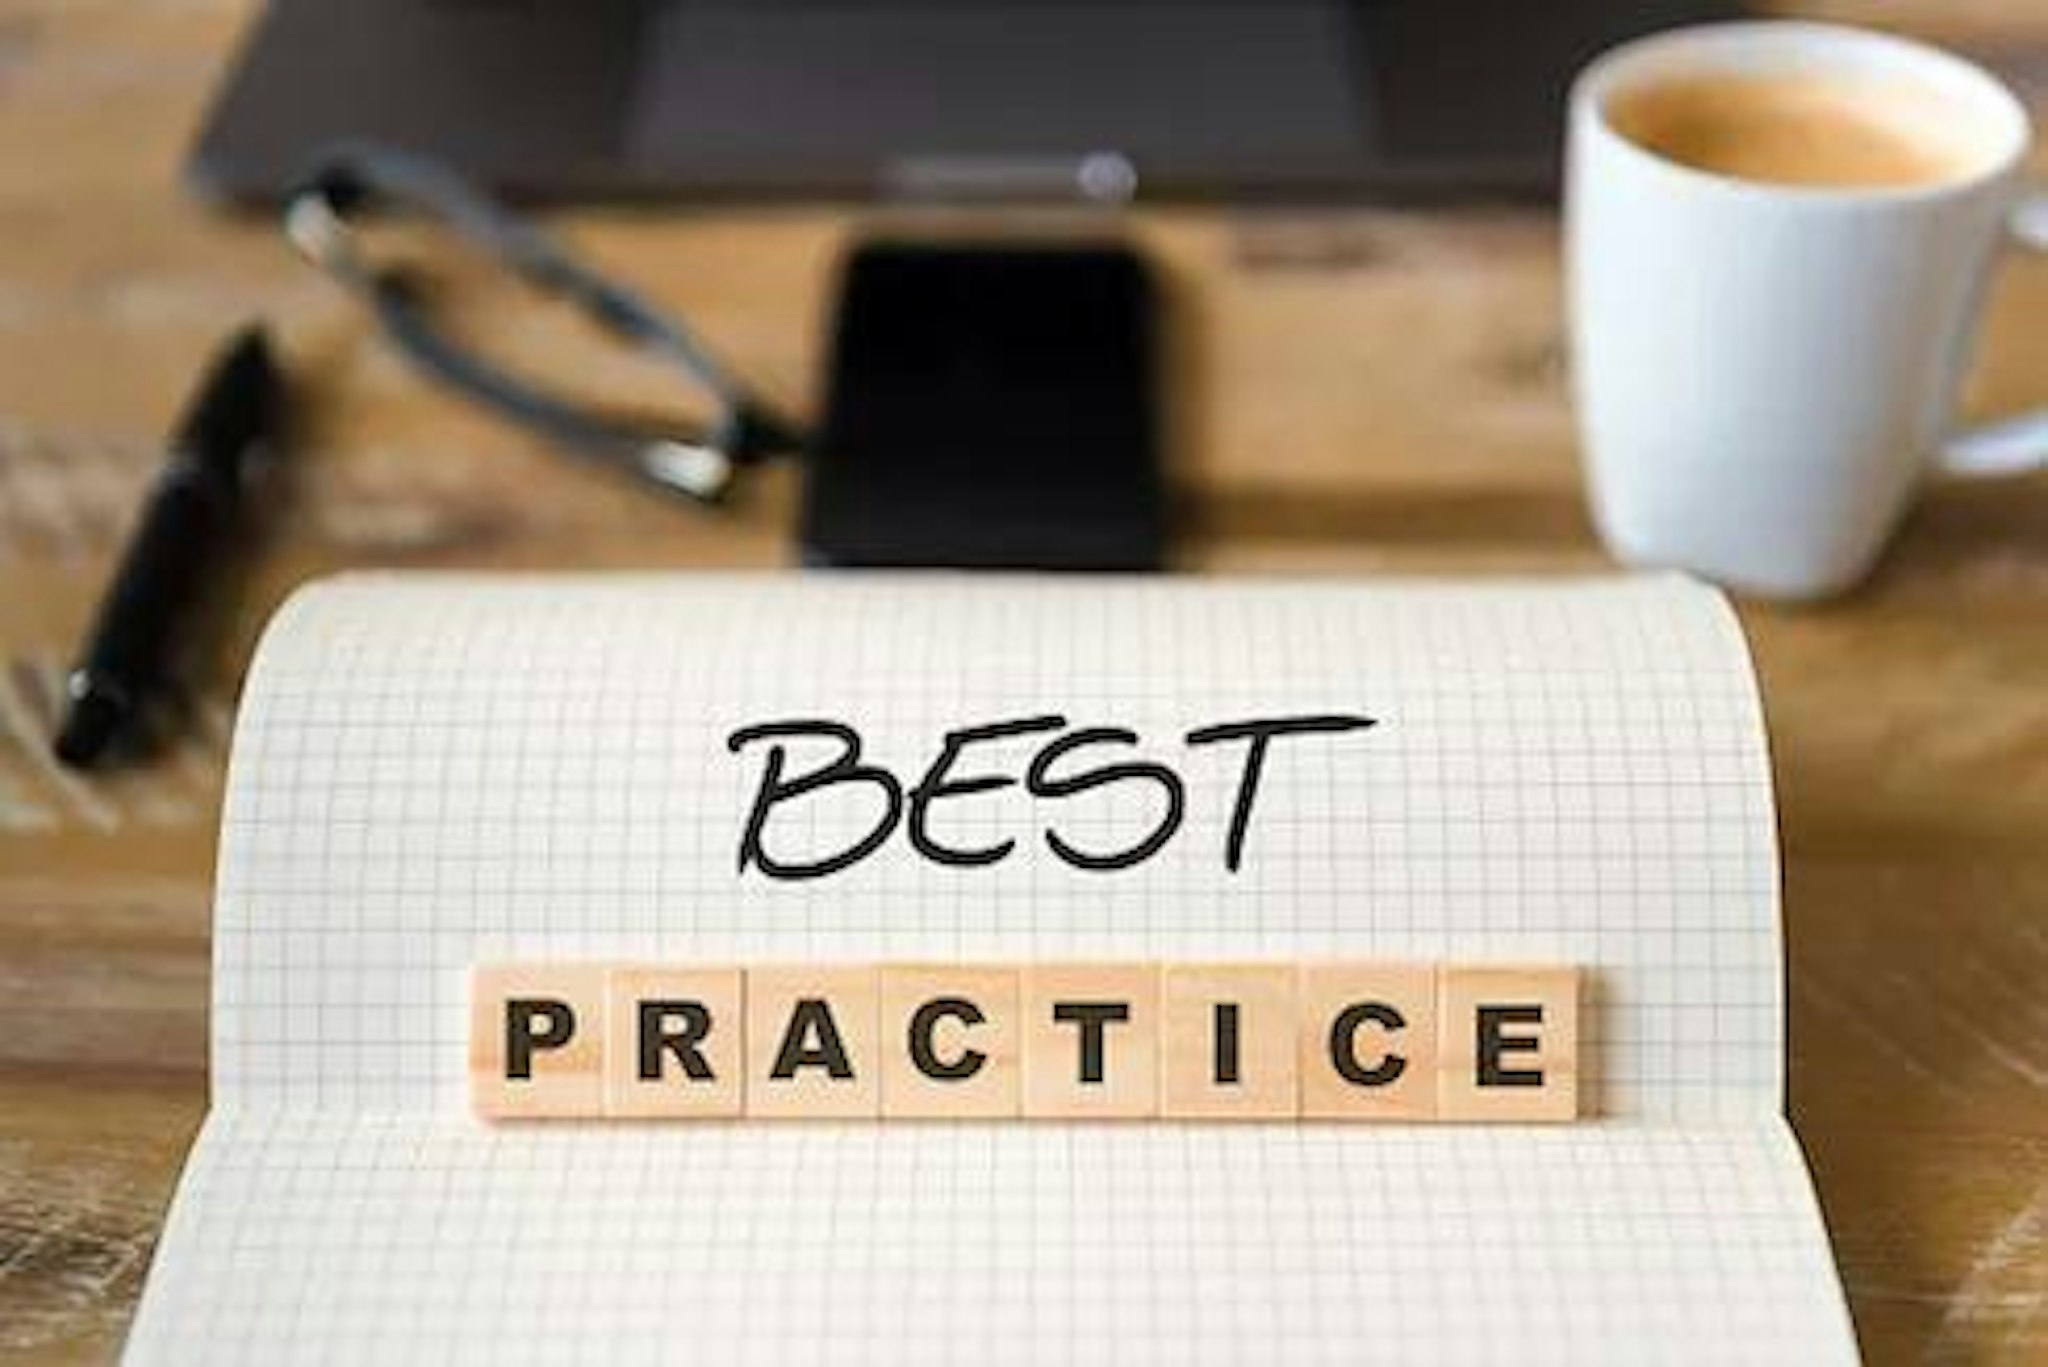 Best practice scrabble pieces to represent corporate governance best practices